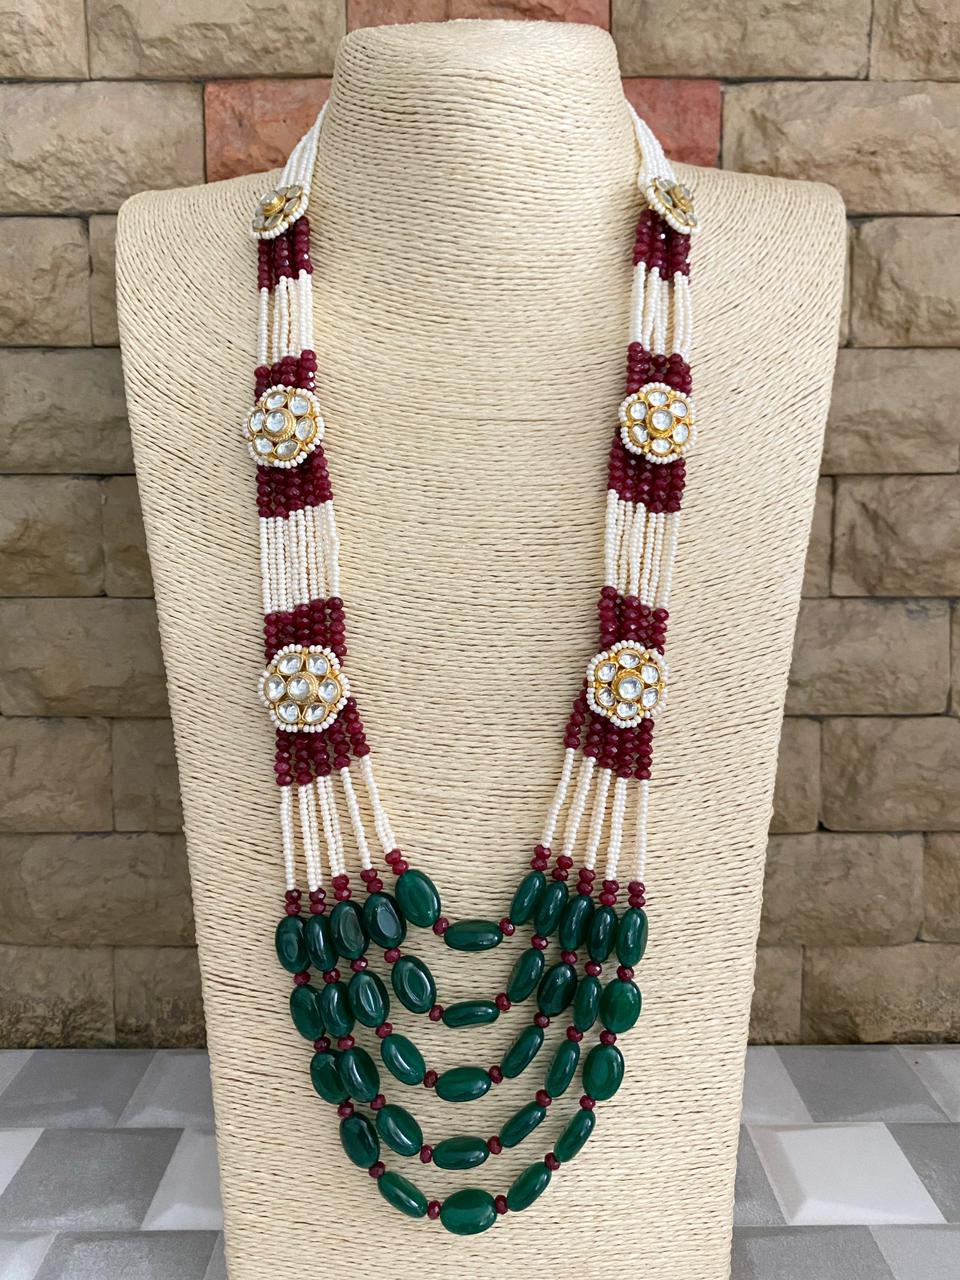 Handmade necklace - アクセサリー